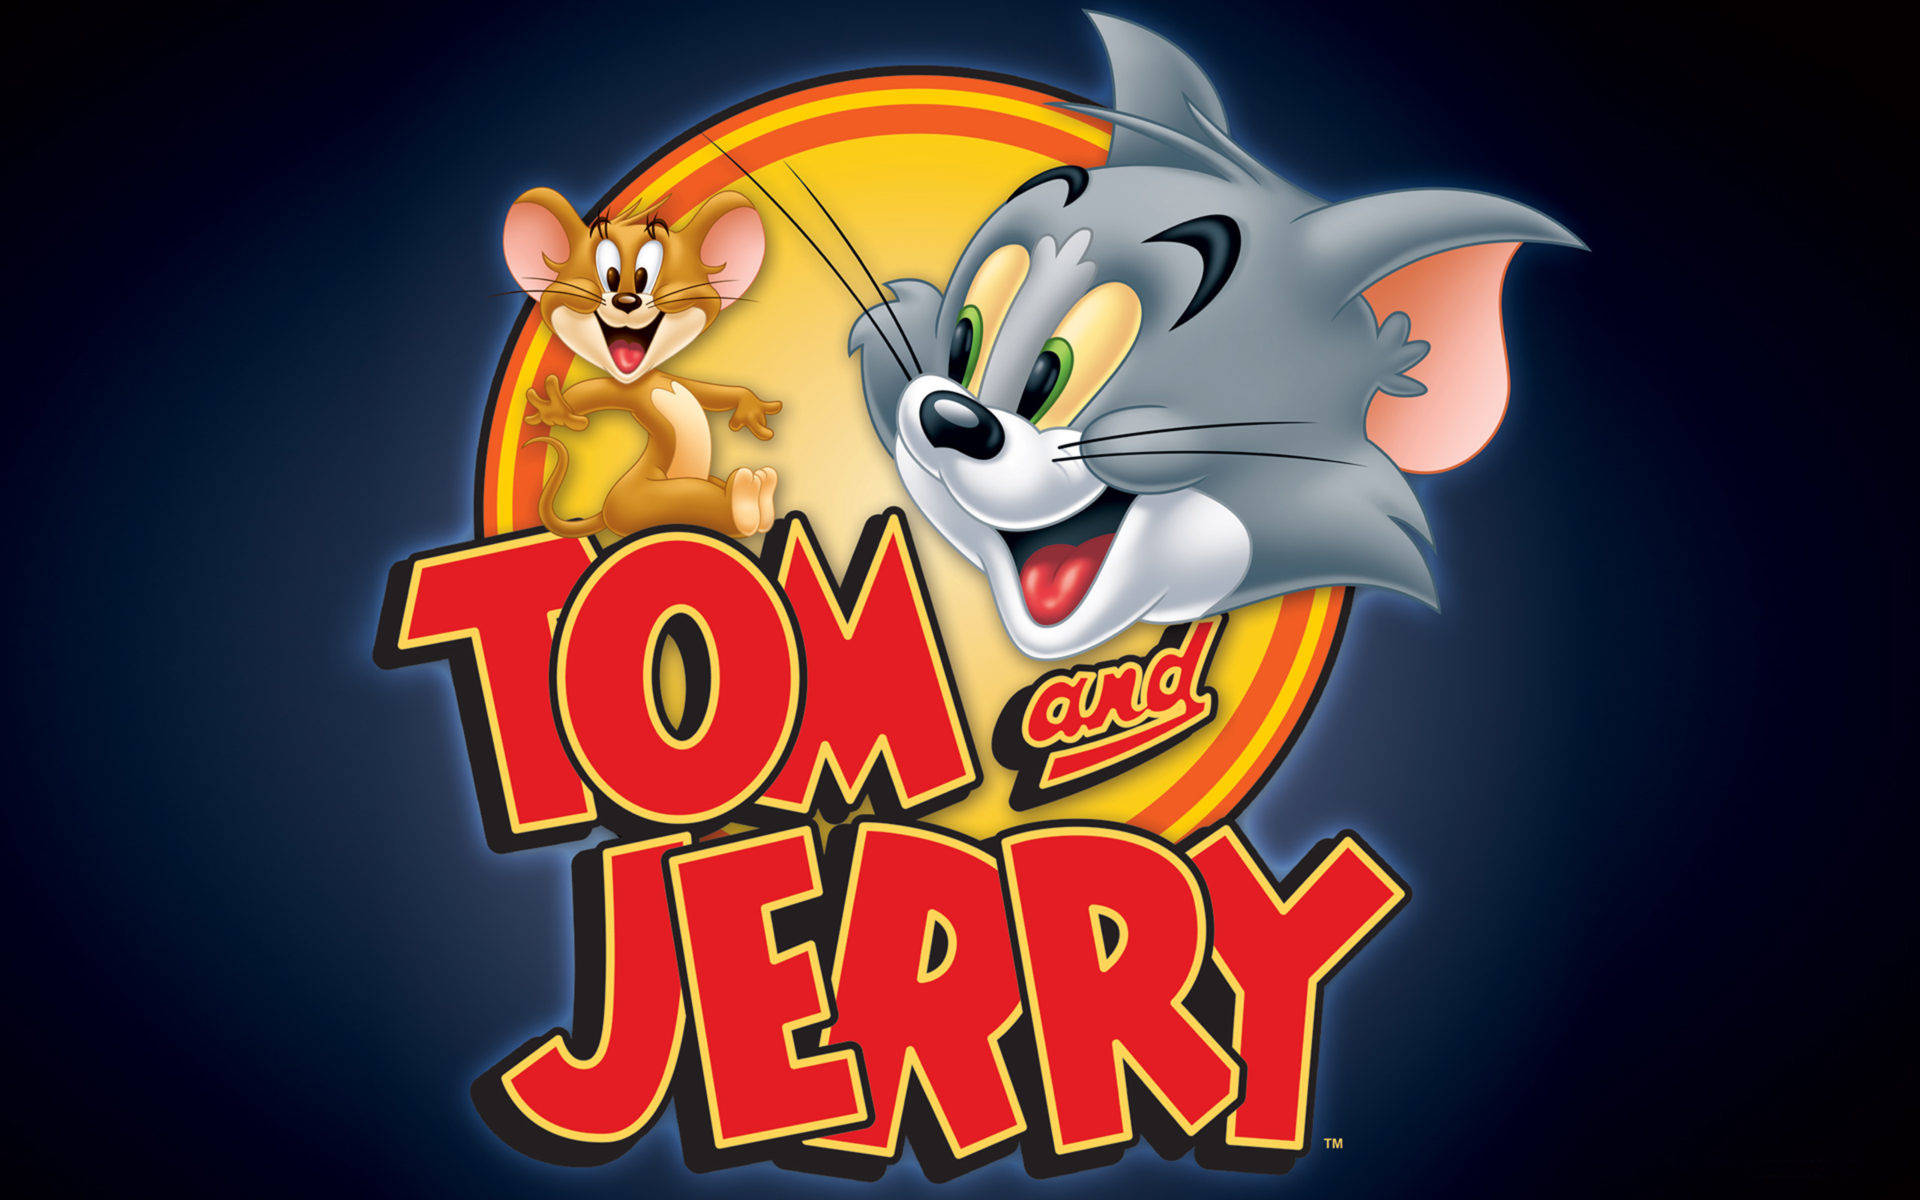 Tom and Jerry logo images, Widescreen wallpaper, High definition, Distinctive branding, 1920x1200 HD Desktop